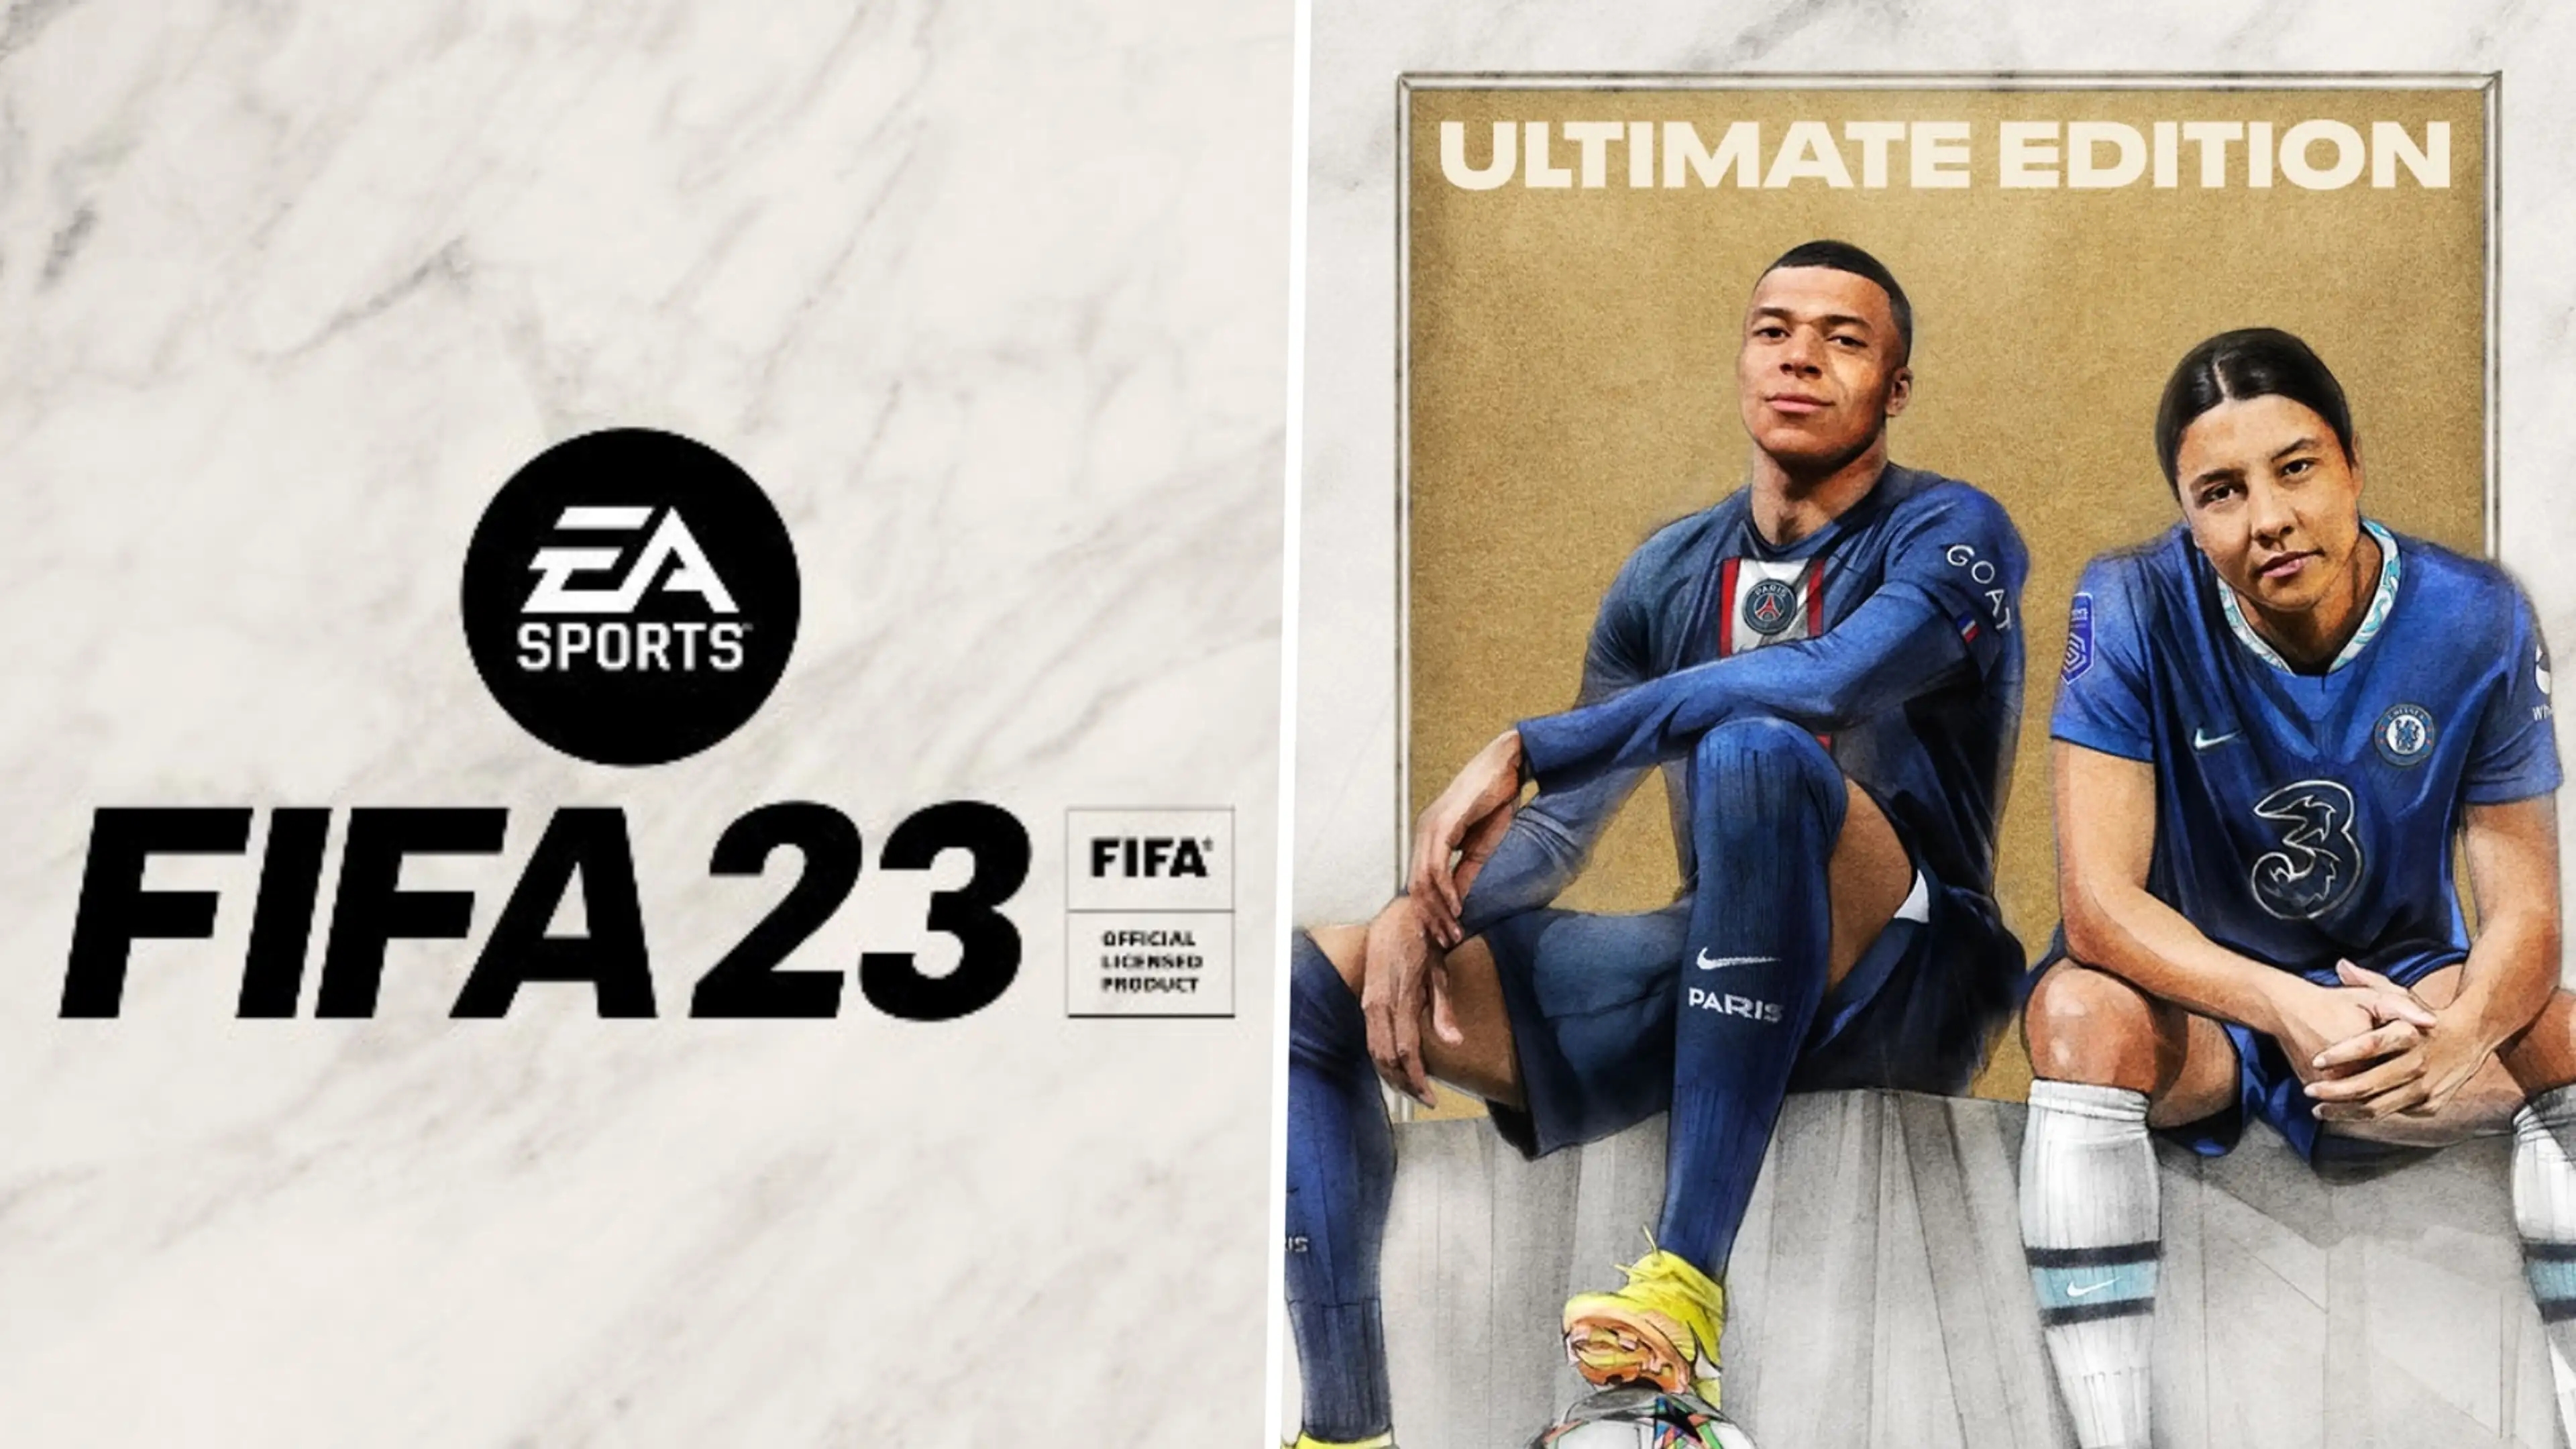 FIFA 23 - Xbox One / Series X